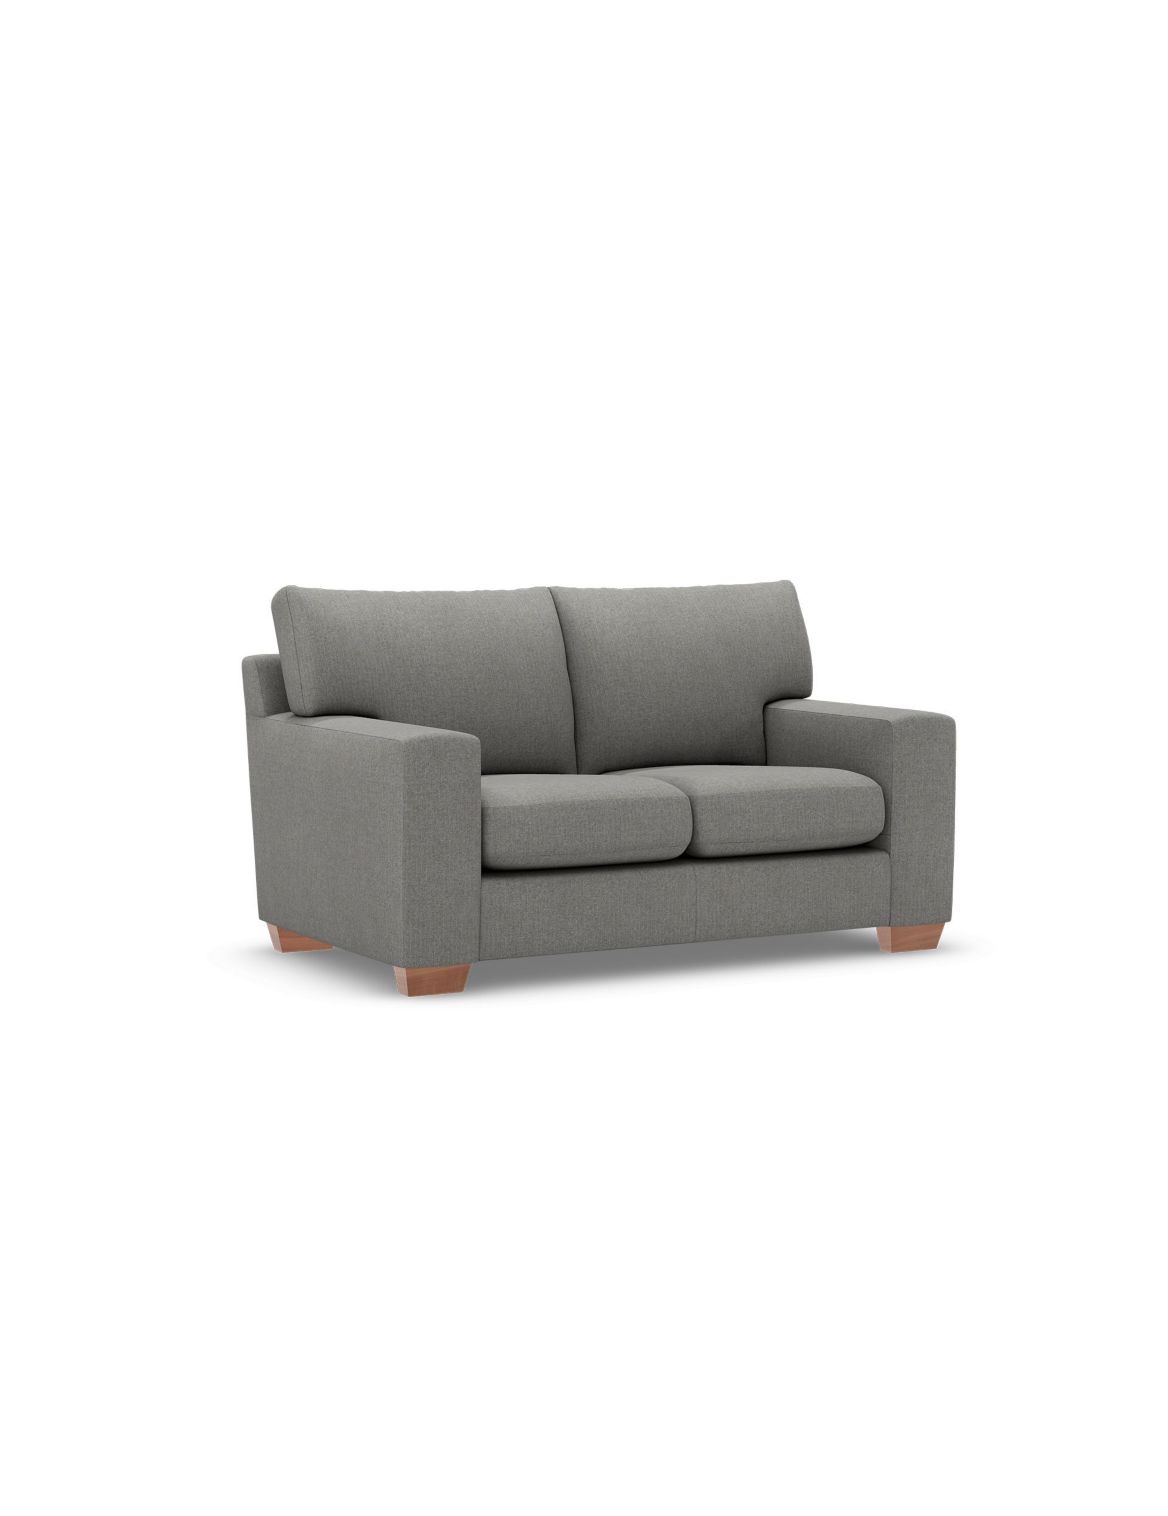 Alfie Compact Sofa grey